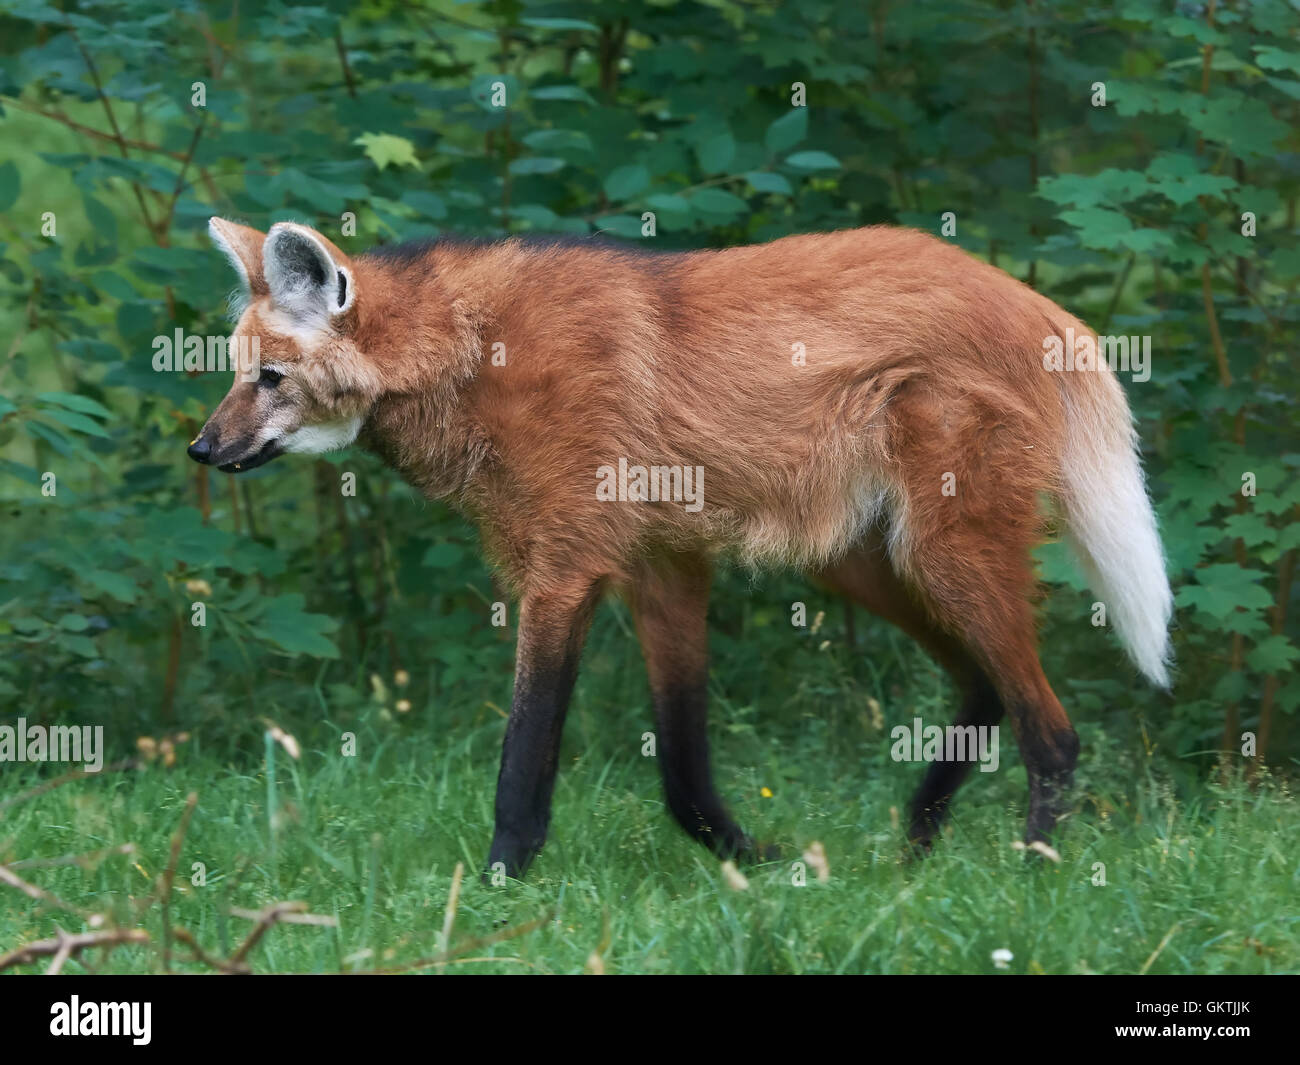 Maned wolf walking around in its habitat Stock Photo